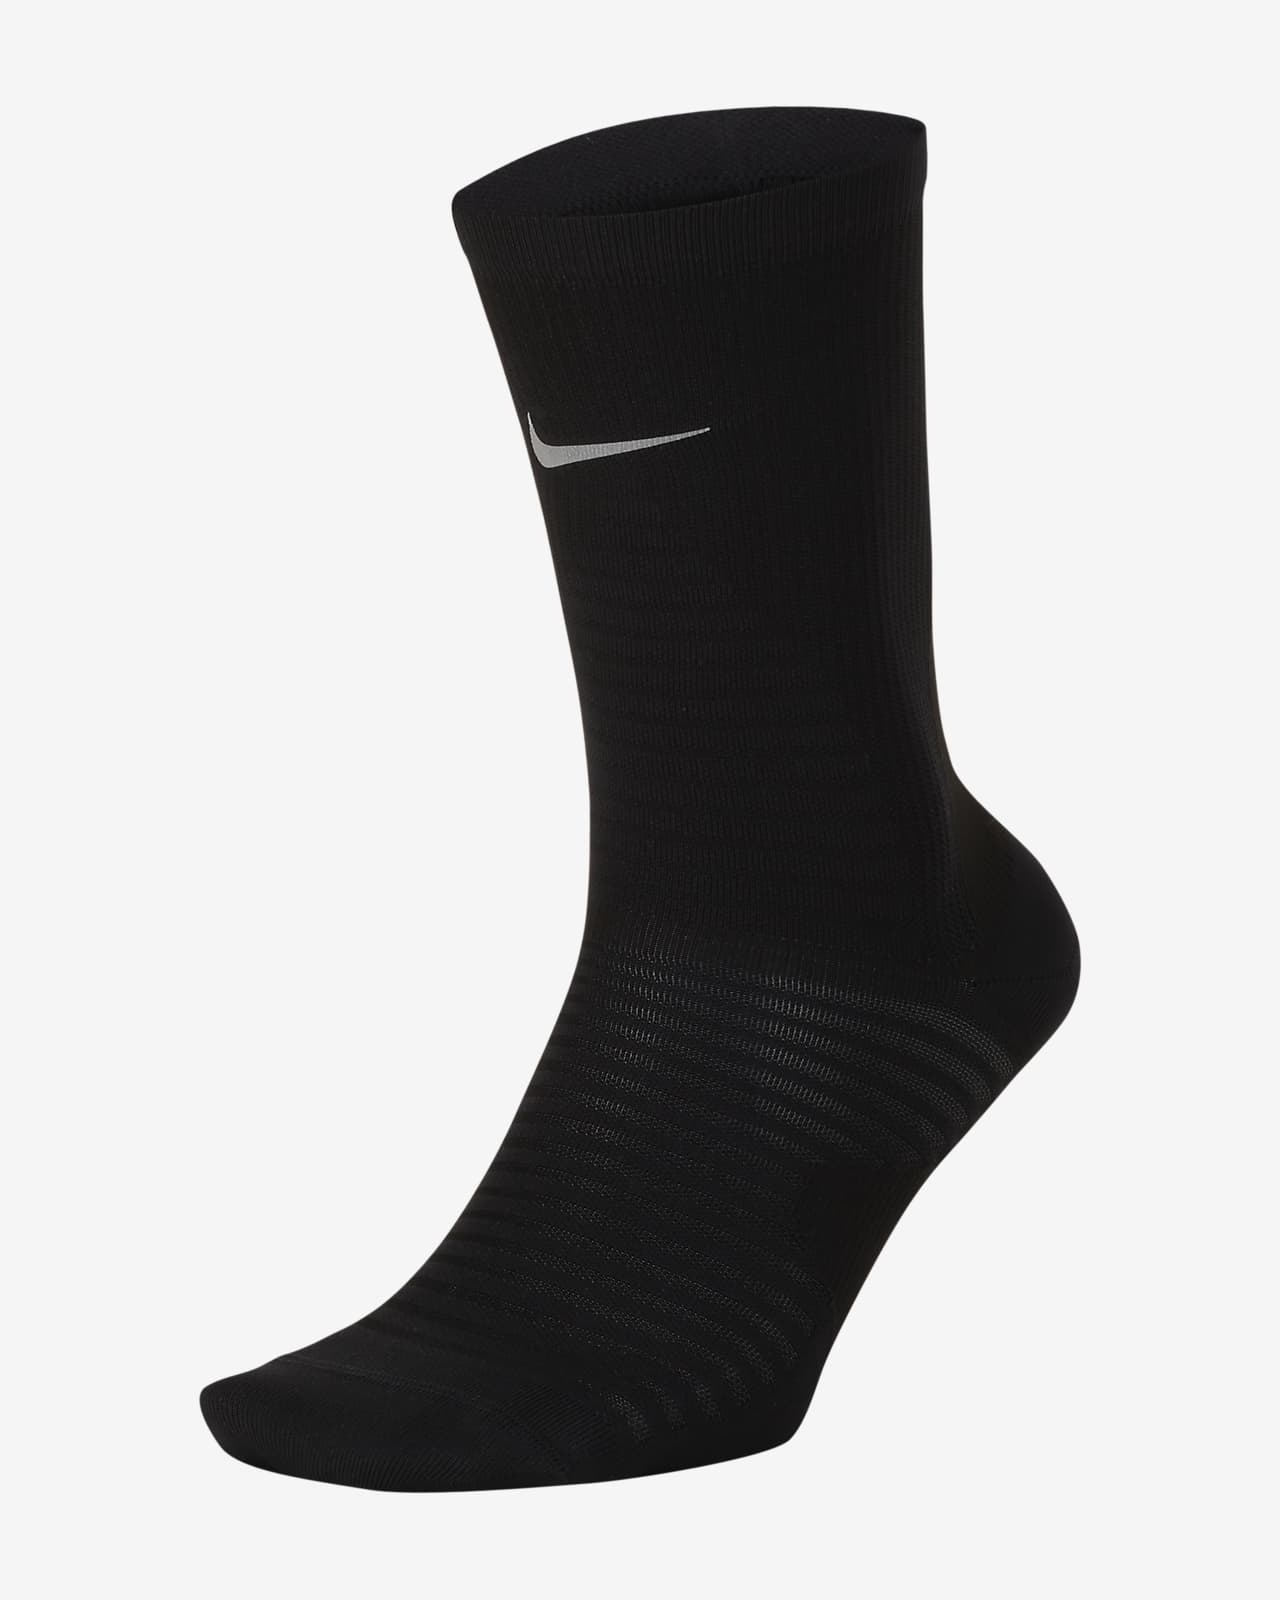 socks nike black